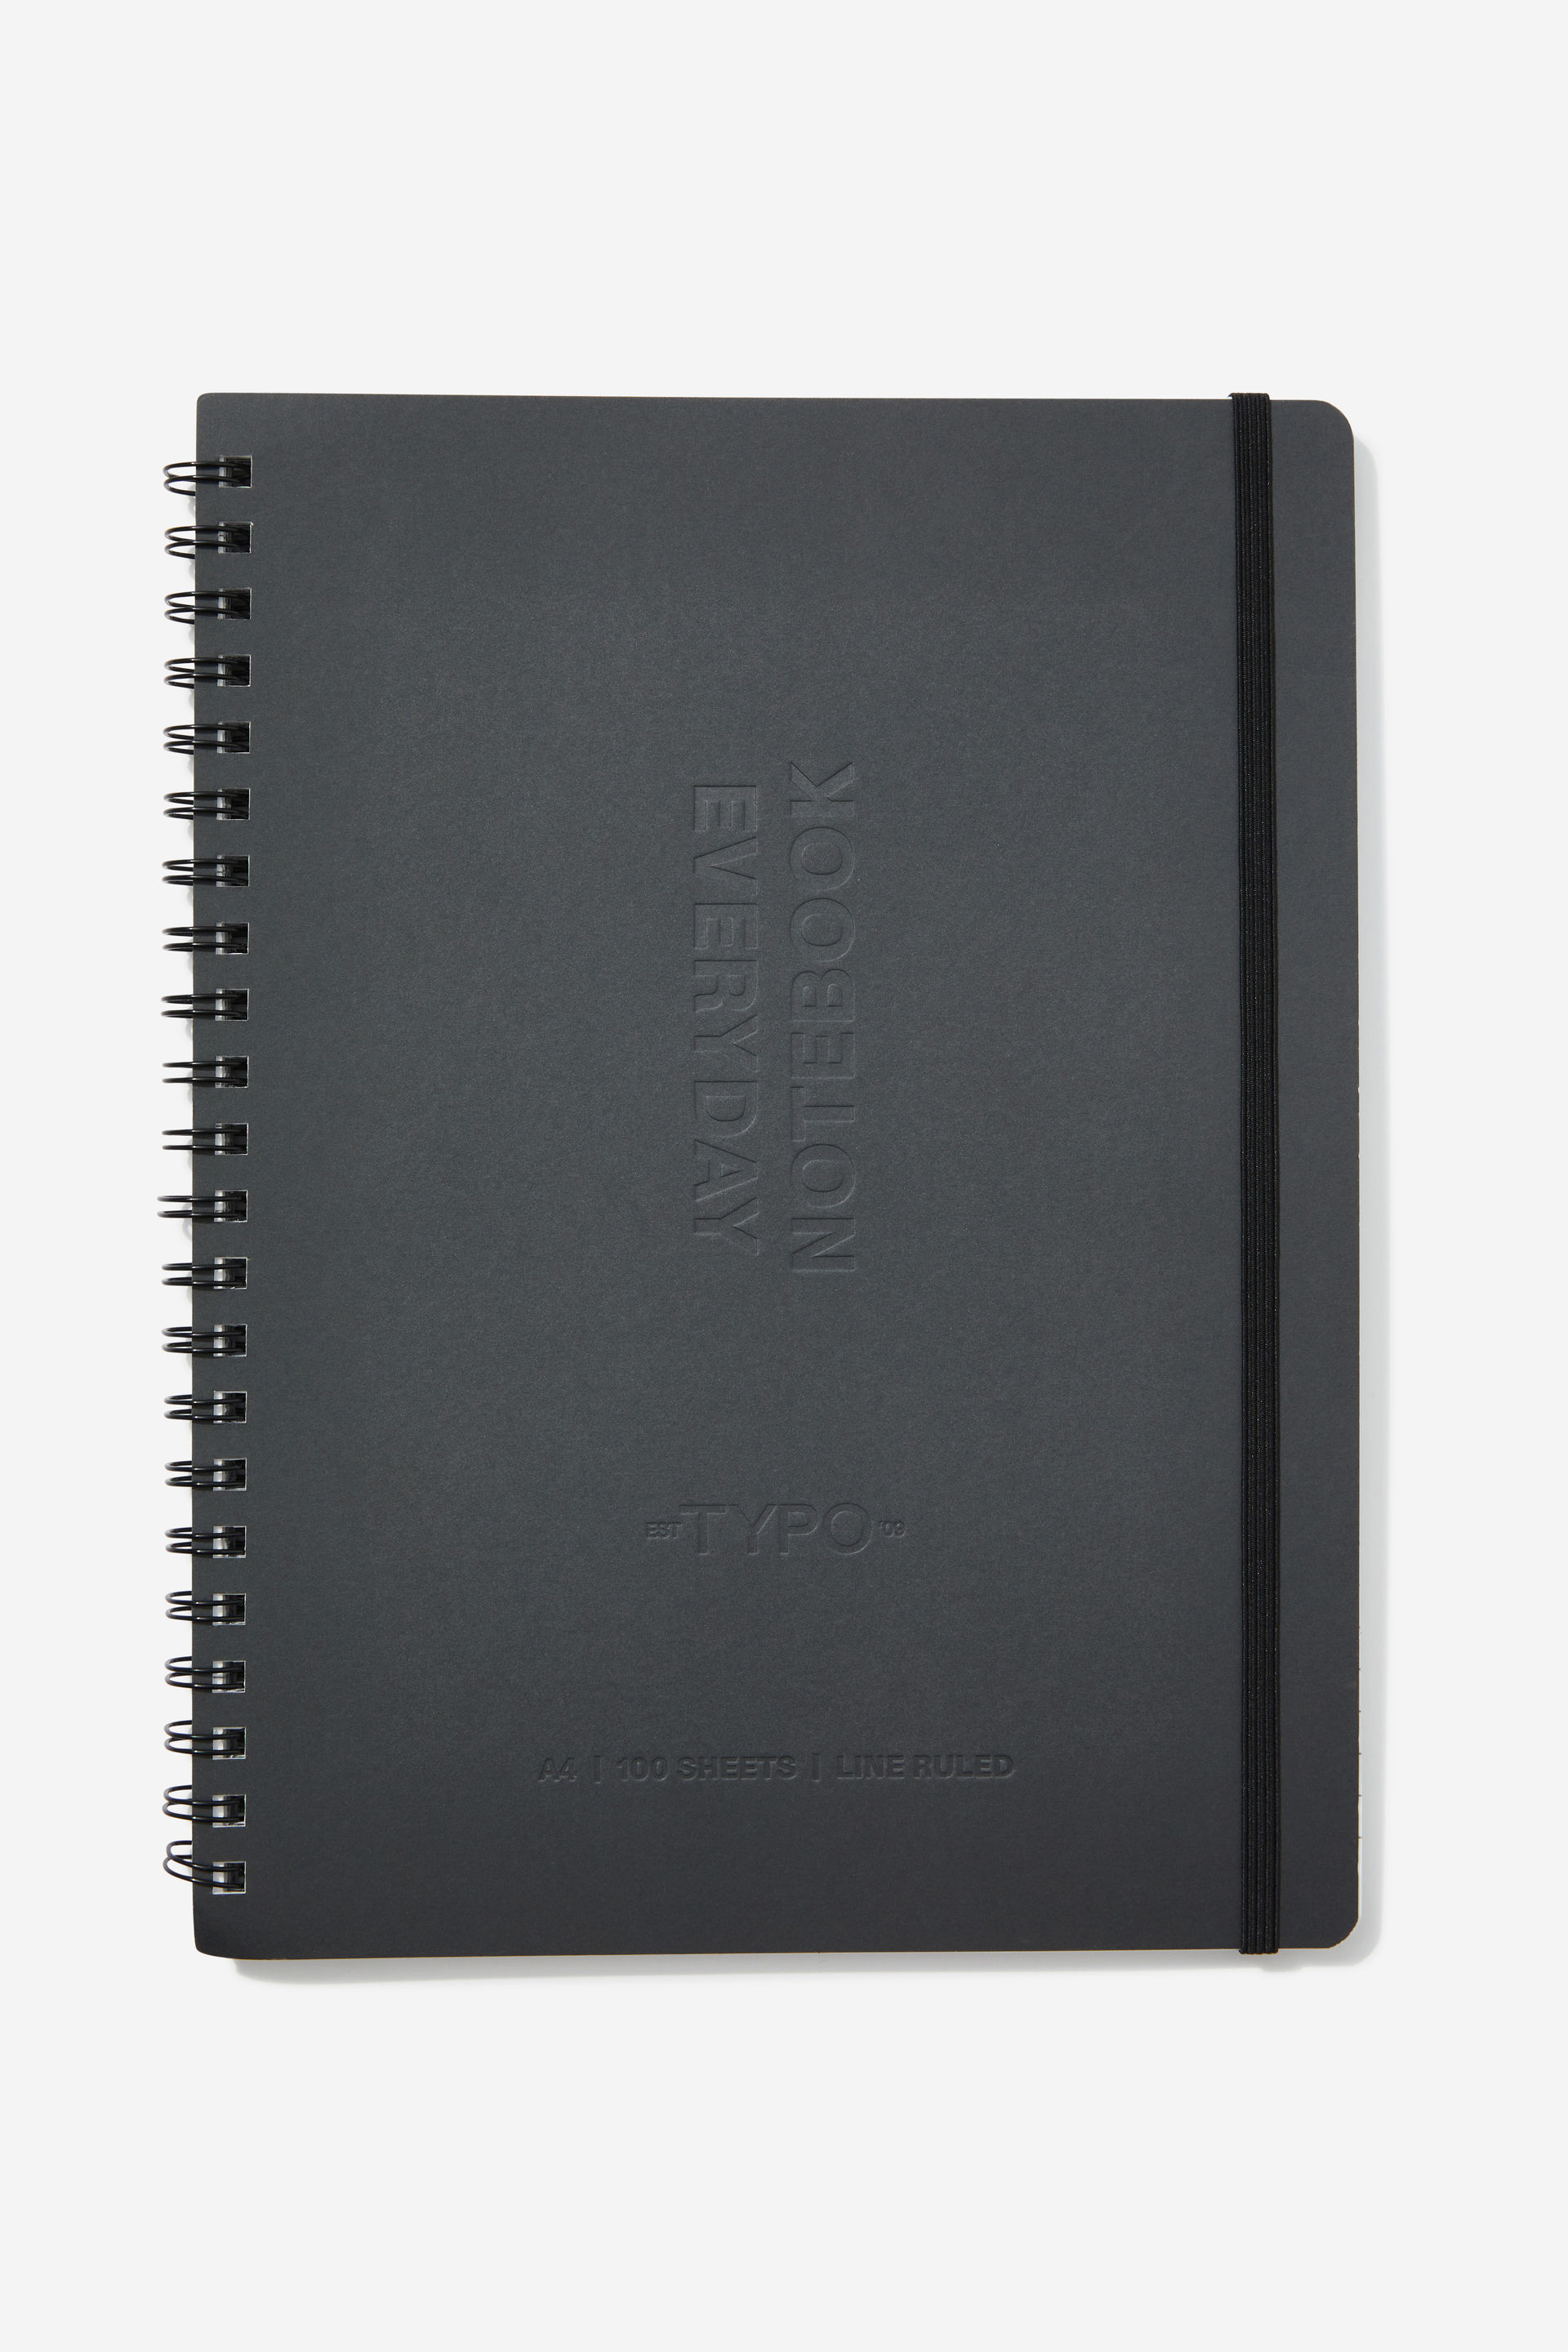 Typo - A4 Everyday Notebook - Black debossed